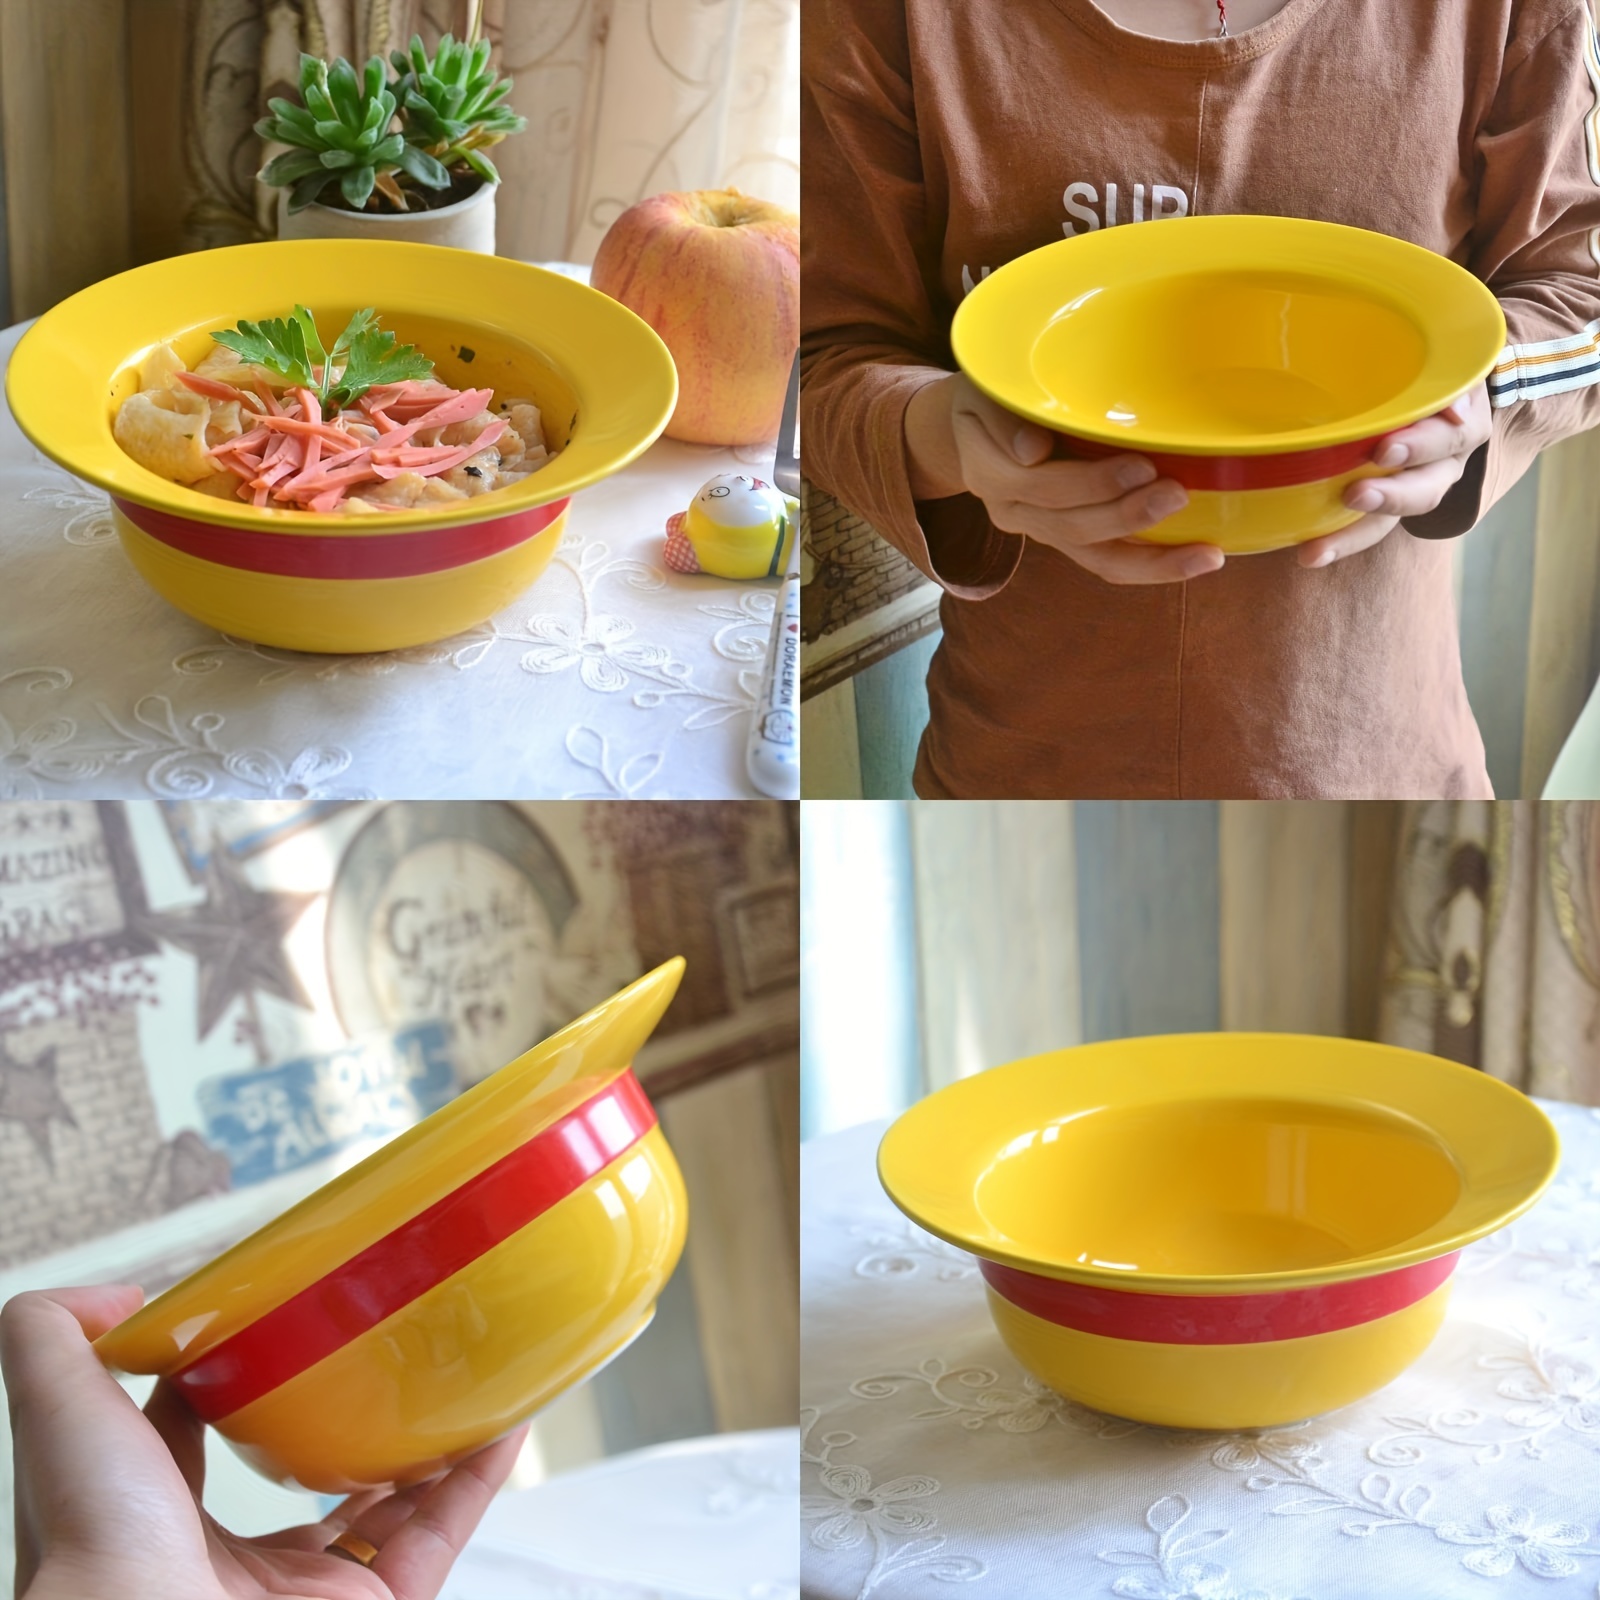 Anime One Piece Ramen Bowl Set with Chopsticks Straw Hat Ceramic Ramen Bowl  Set Merchandise Fans Gifts, Dishwasher & Microwave Safe (yellow)